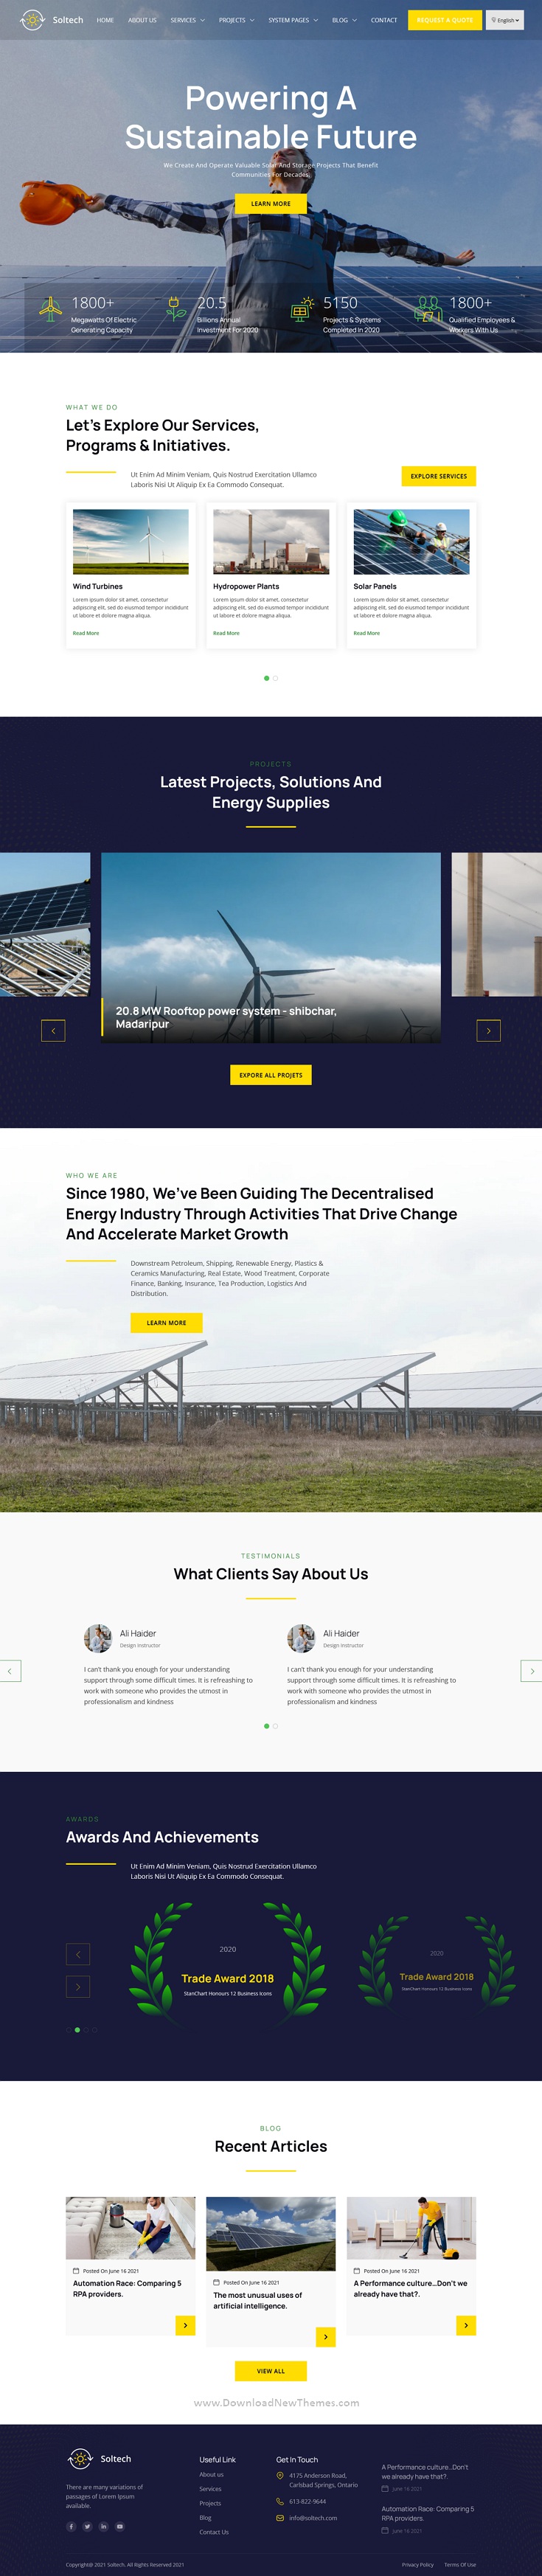 Soltech - Solar Energy and Environment HubSpot Theme